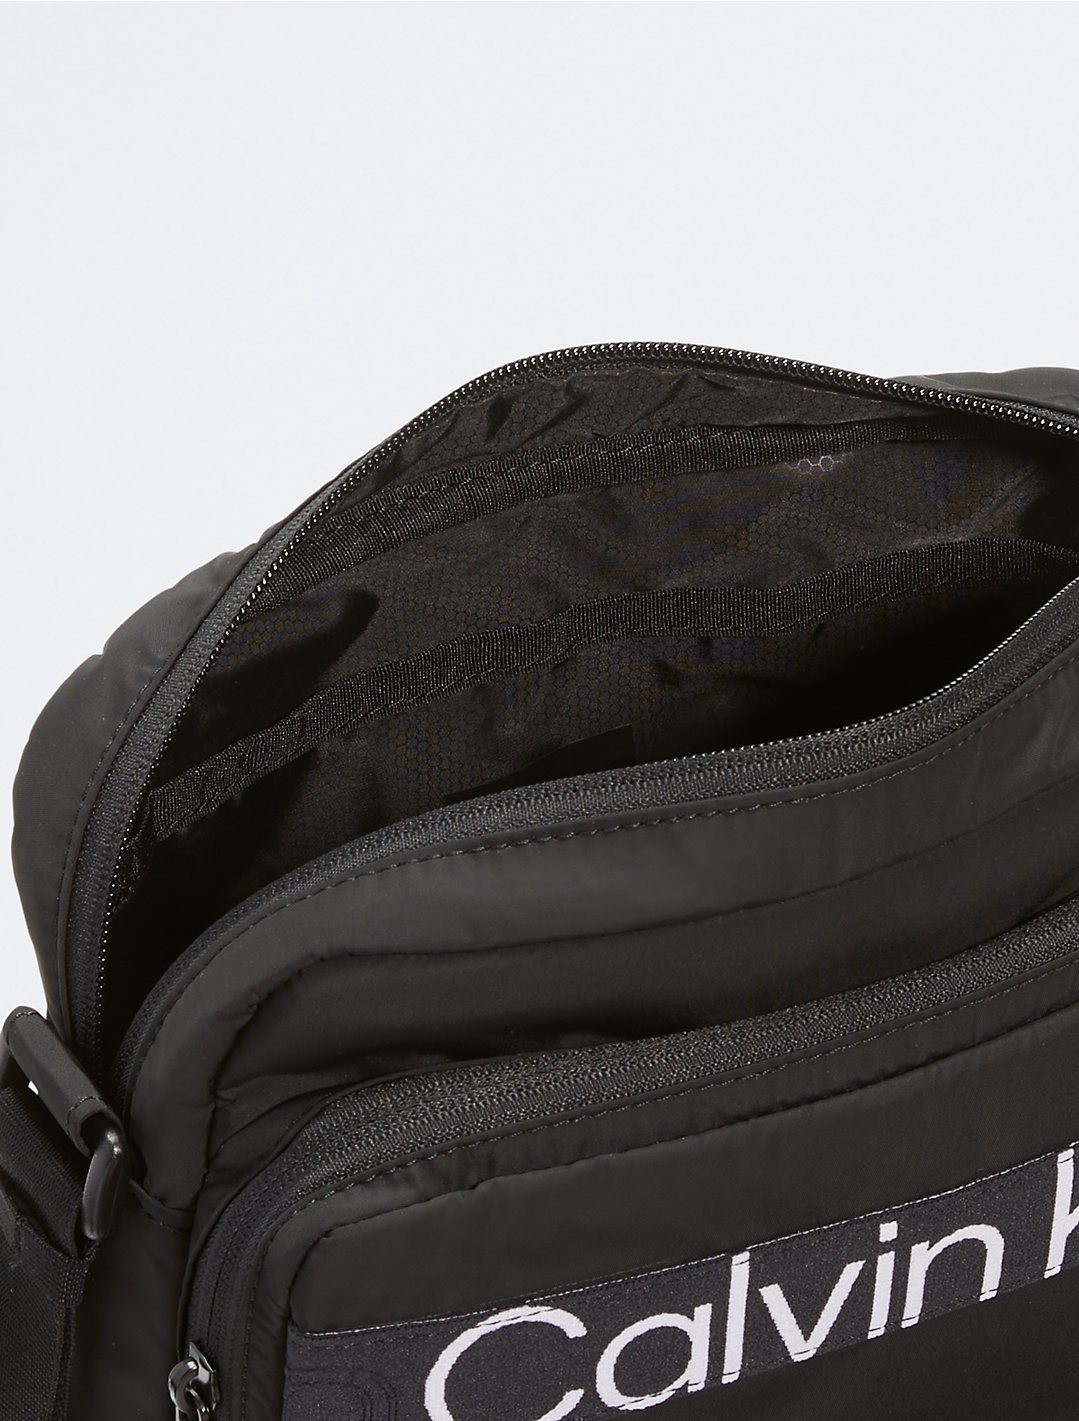 vloeiend Verleiden Graf CK Sport Active Icon Crossbody Camera Bag | Calvin Klein